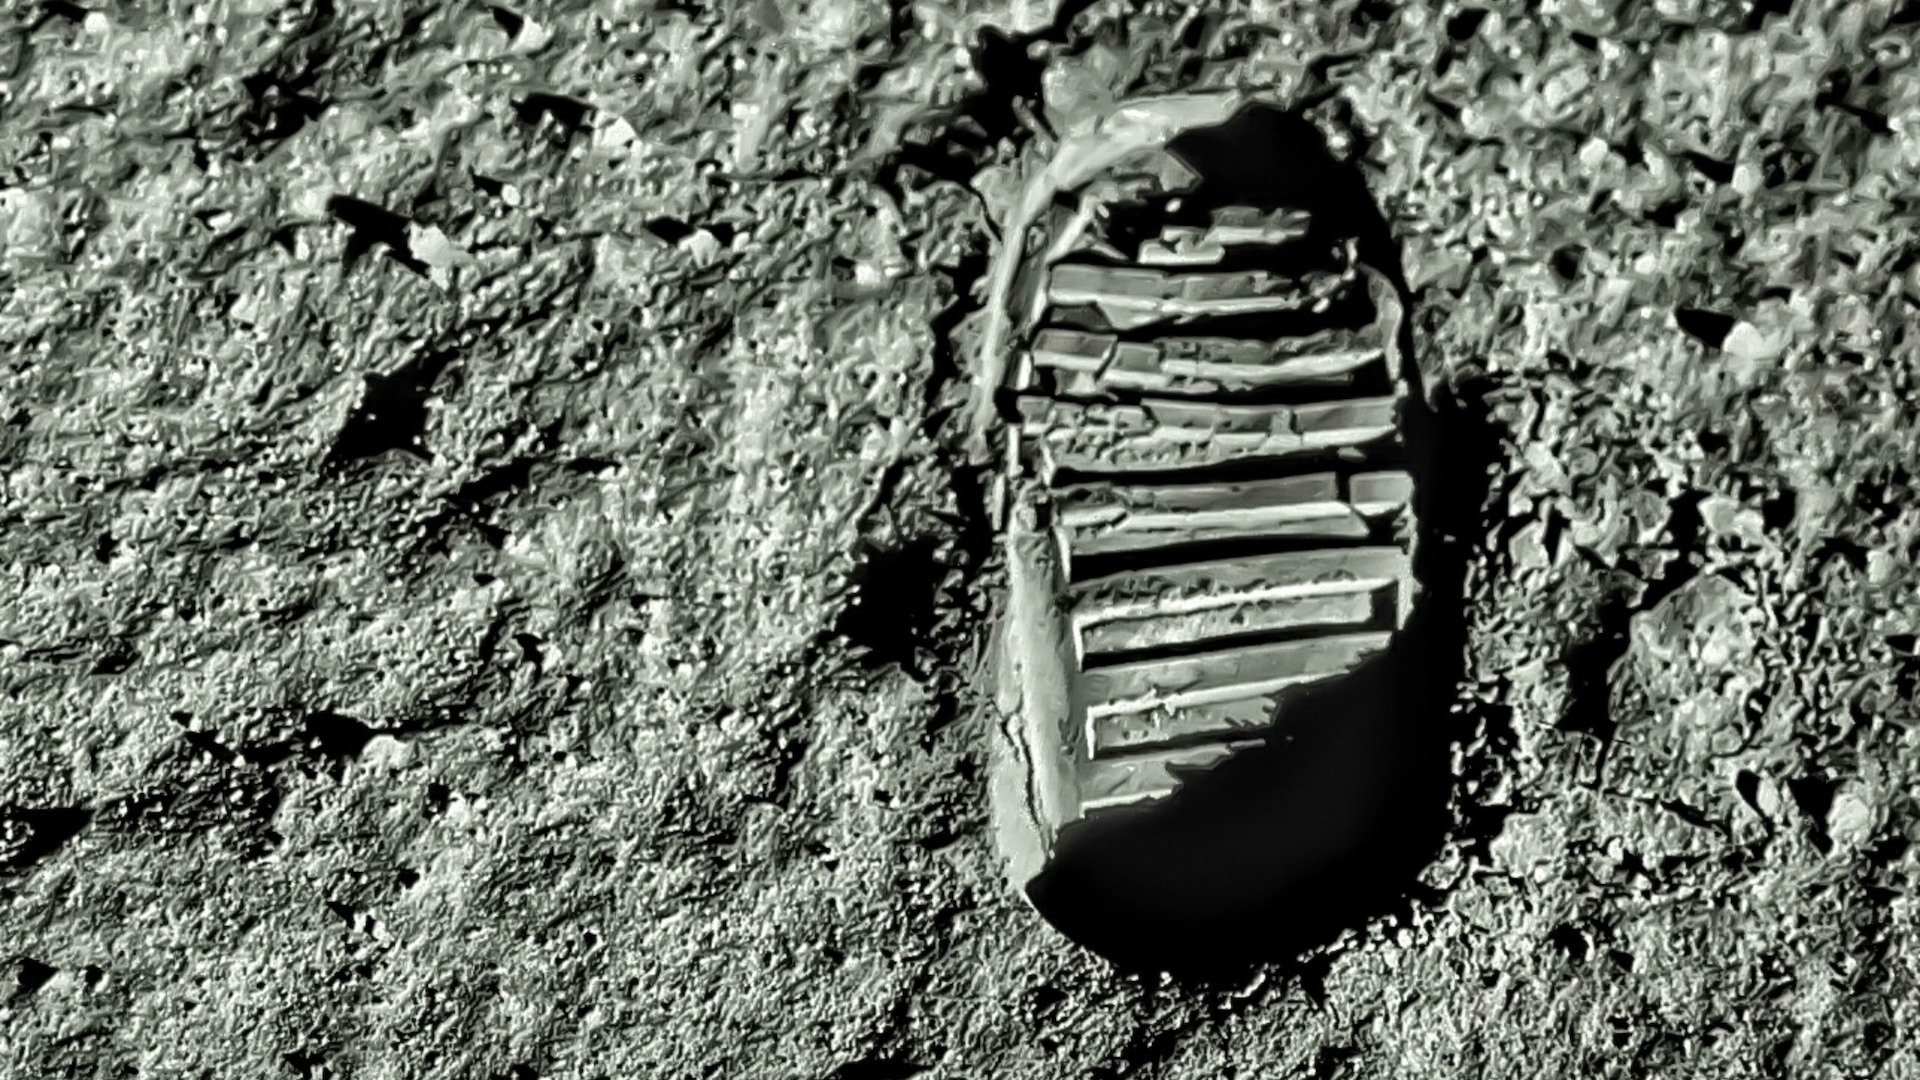 Buzz Aldrin's footprint on the Moon